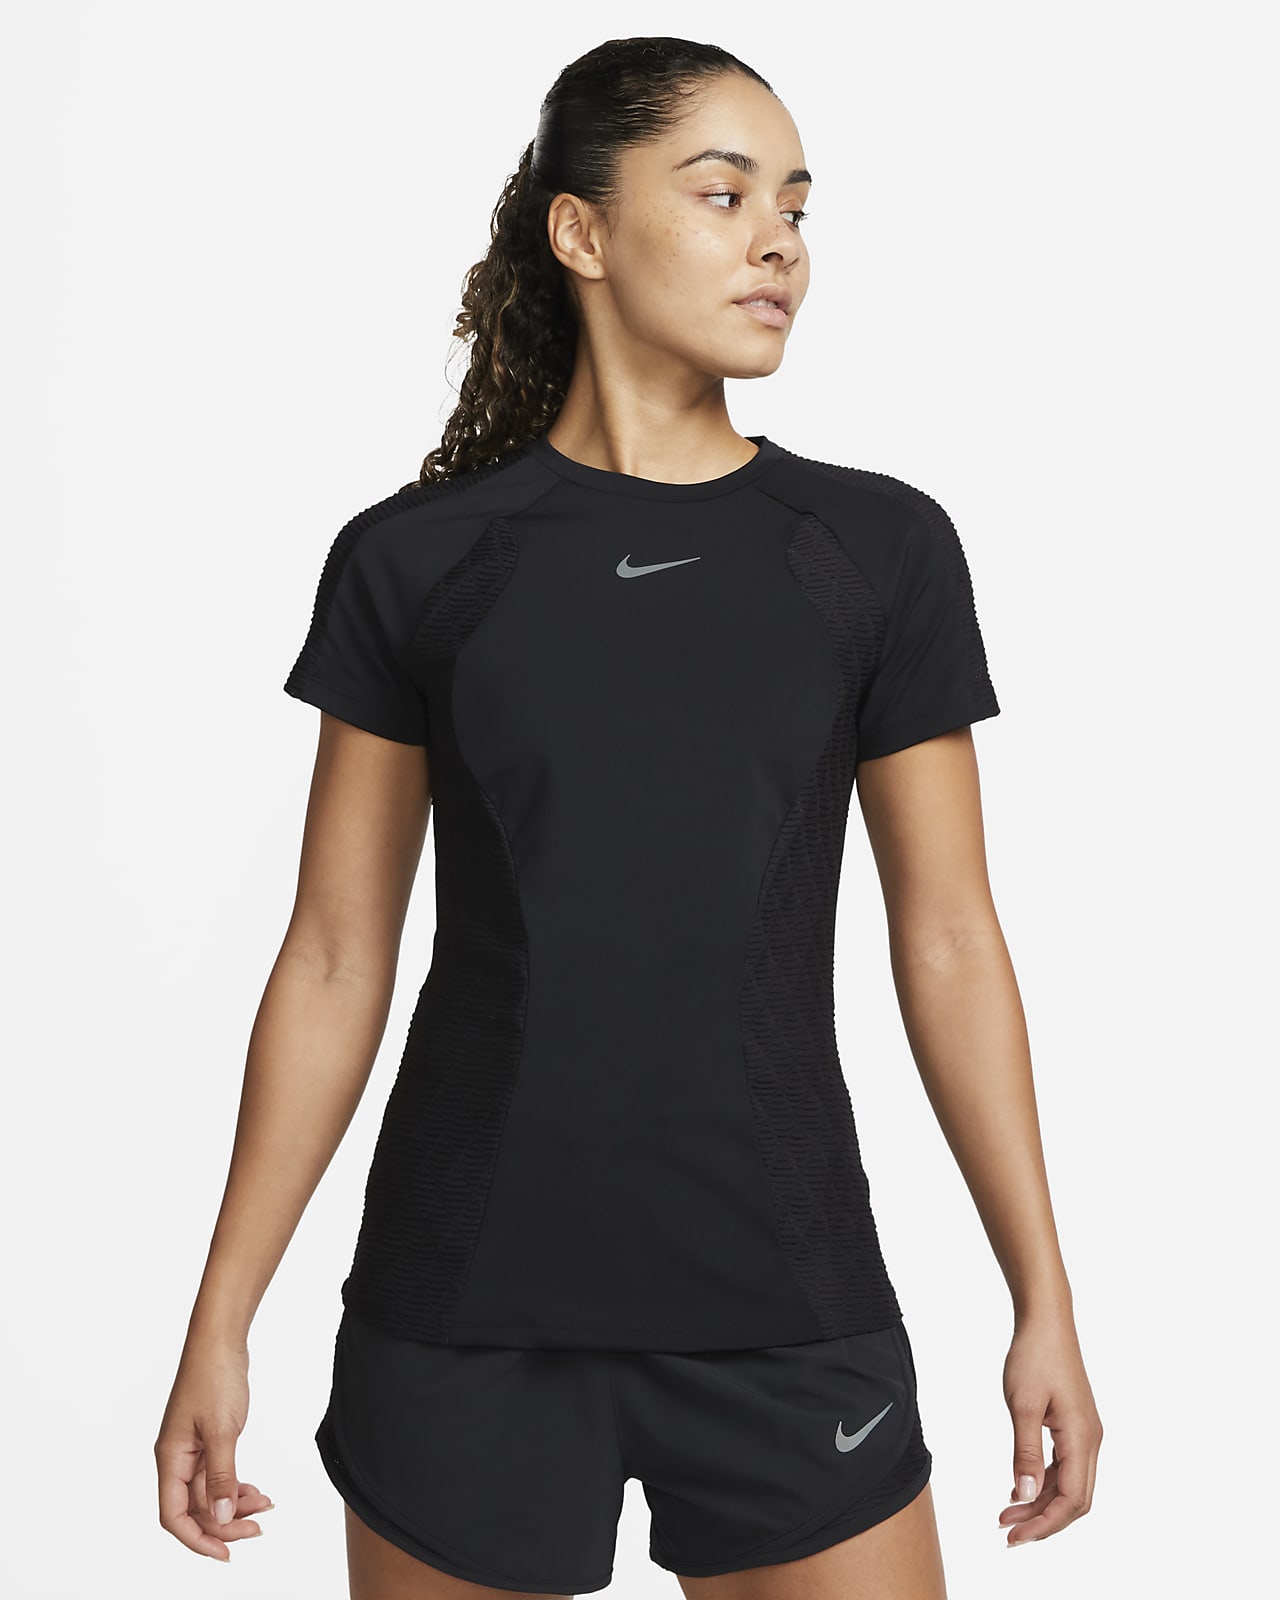 Nike Dri-FIT ADV Run Division Women's Short-Sleeve Running Top